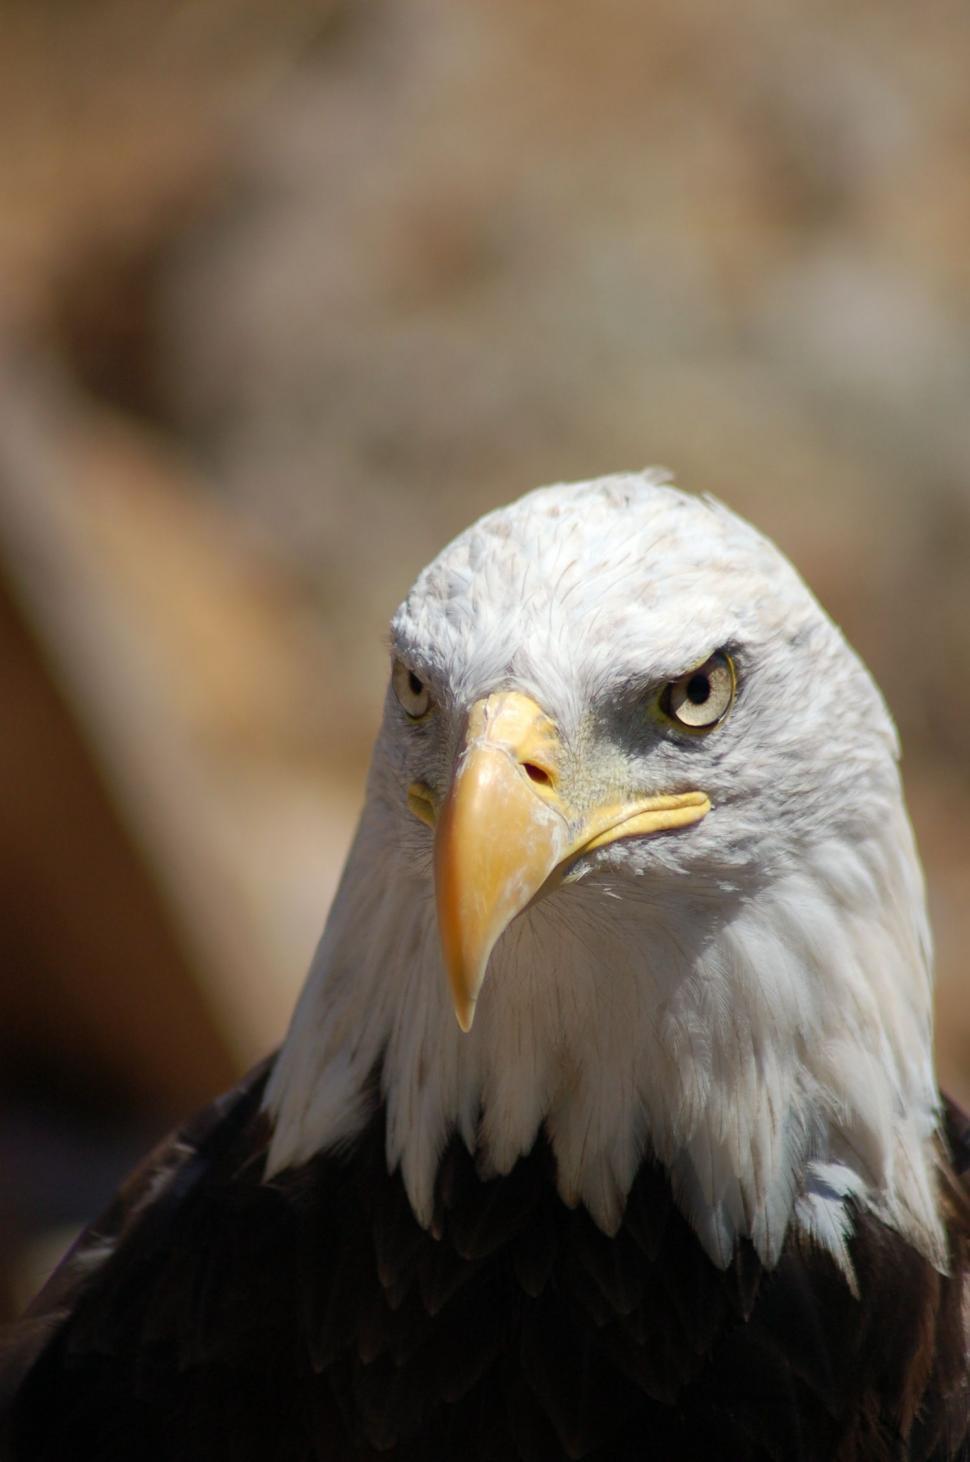 Free Image of Bald eagle 